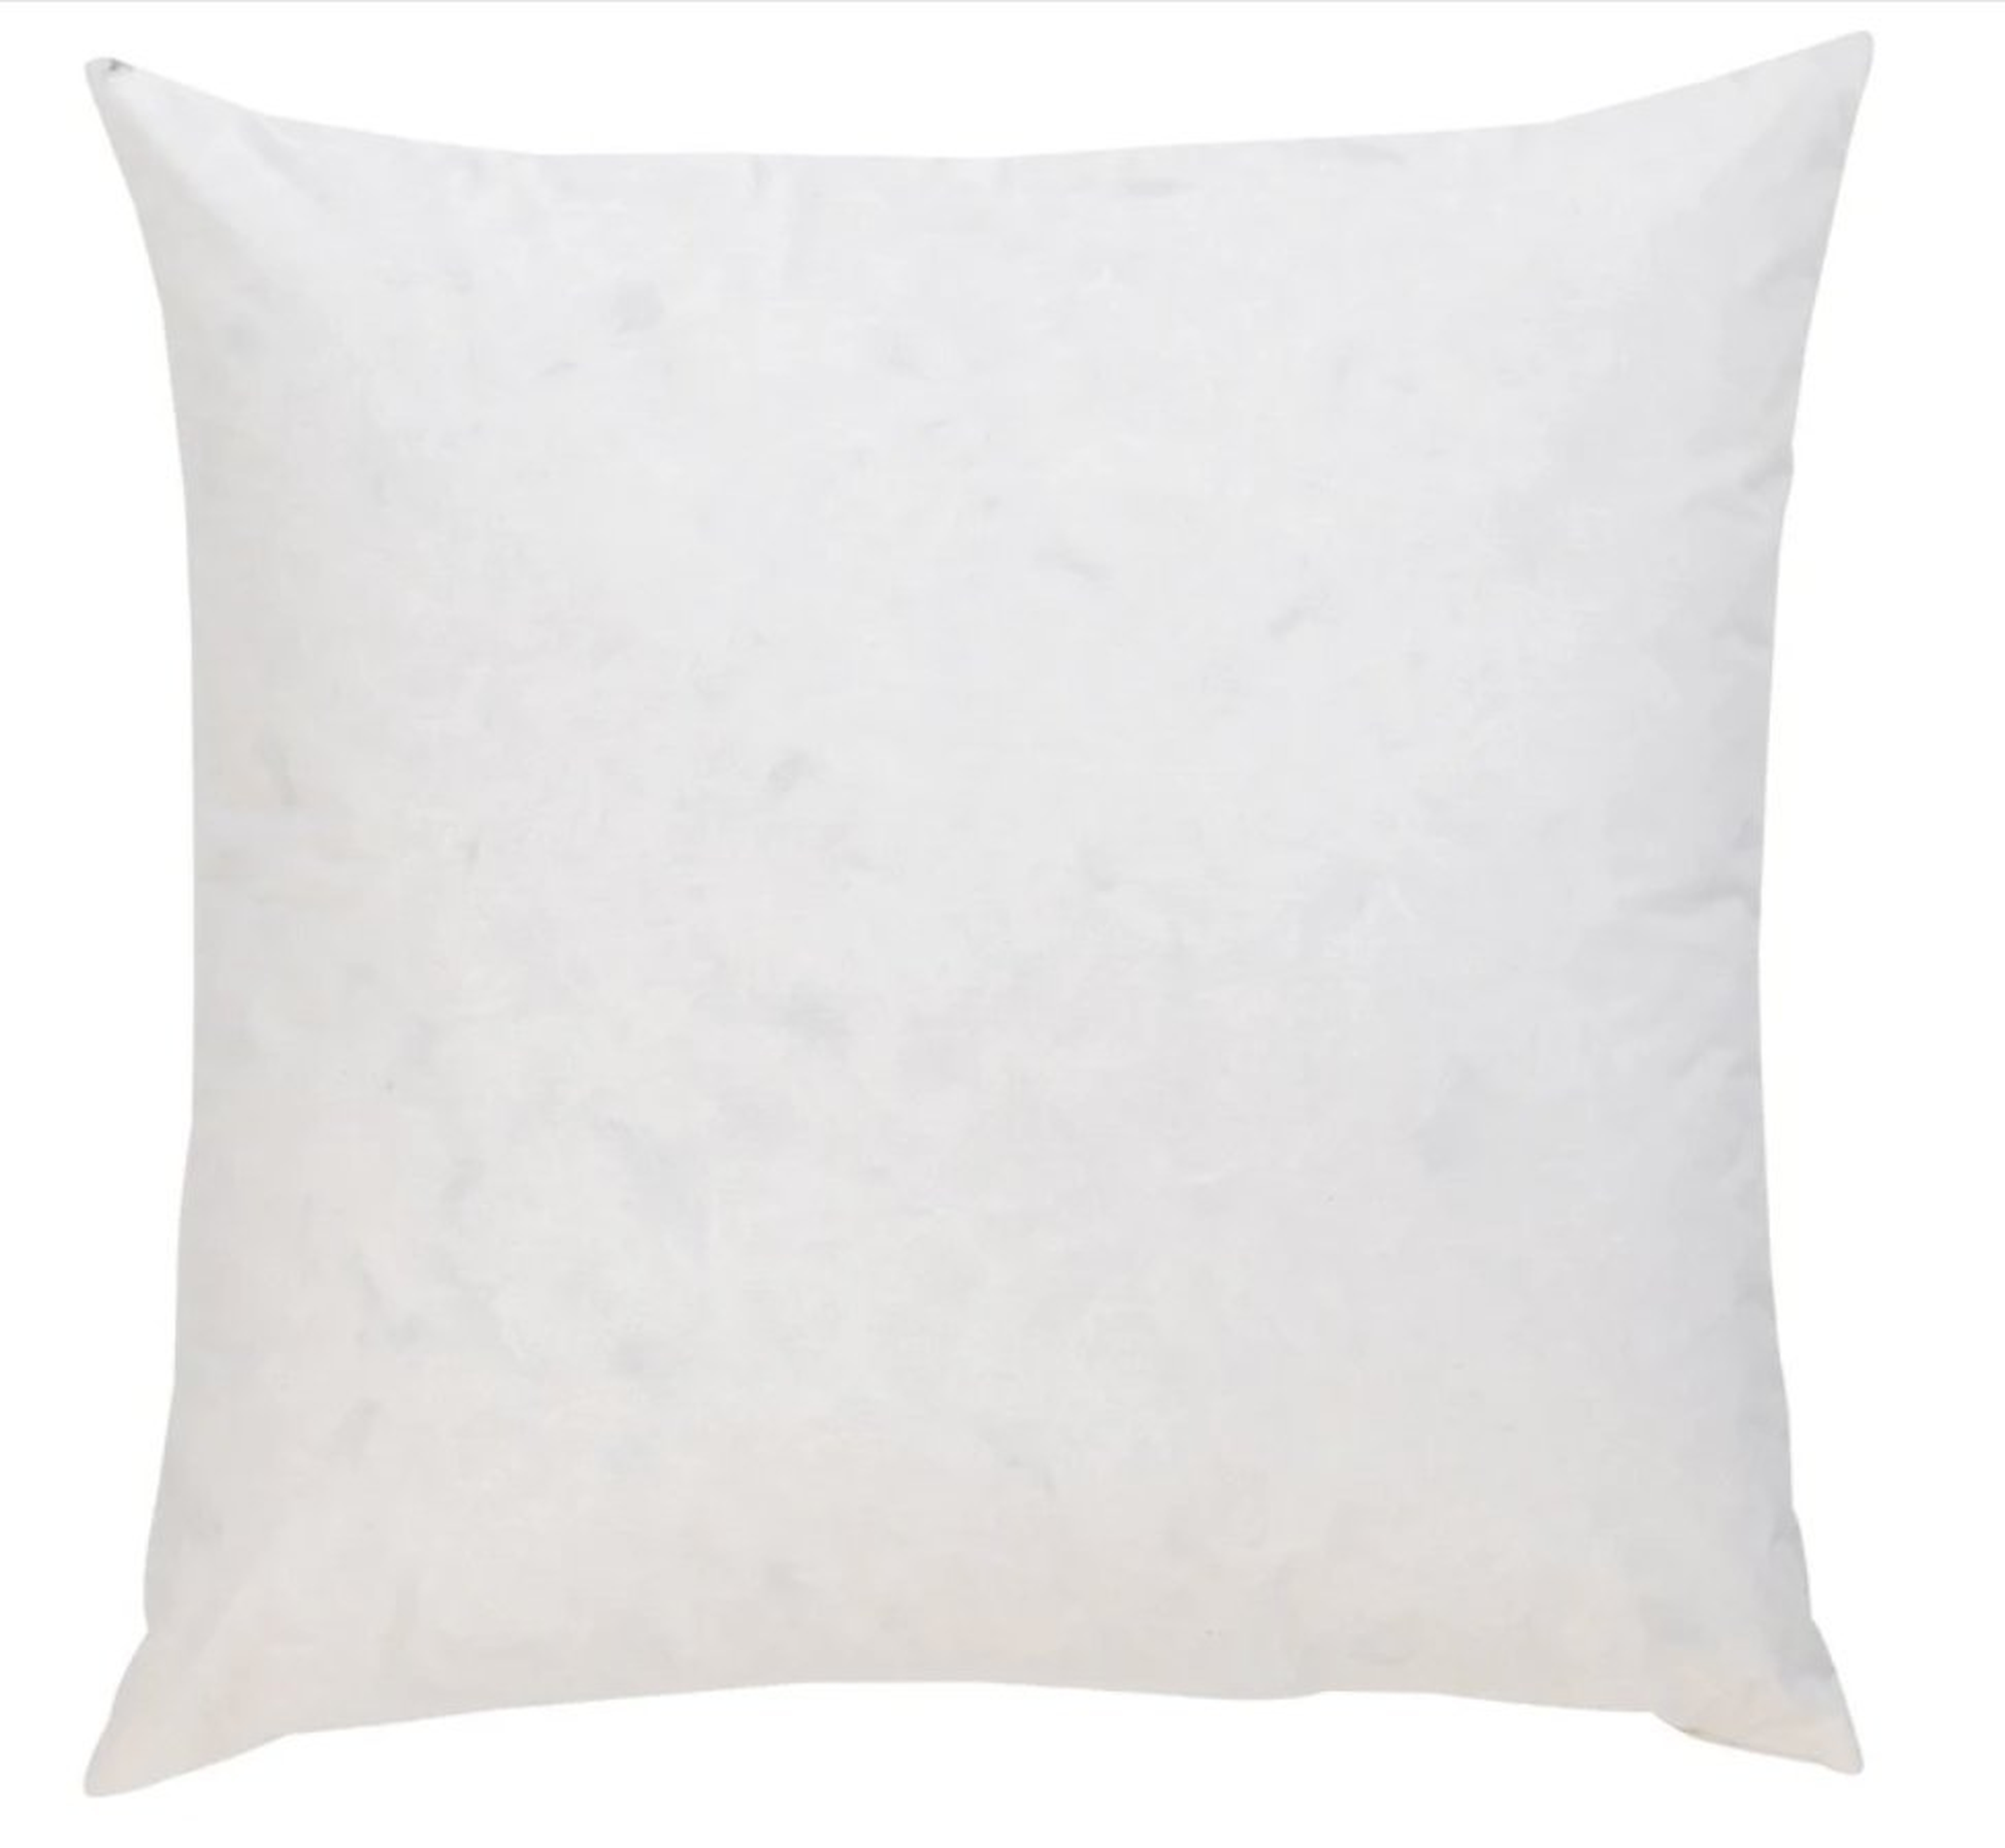 Premium Pillow Insert, 22"x22" - McGee & Co.